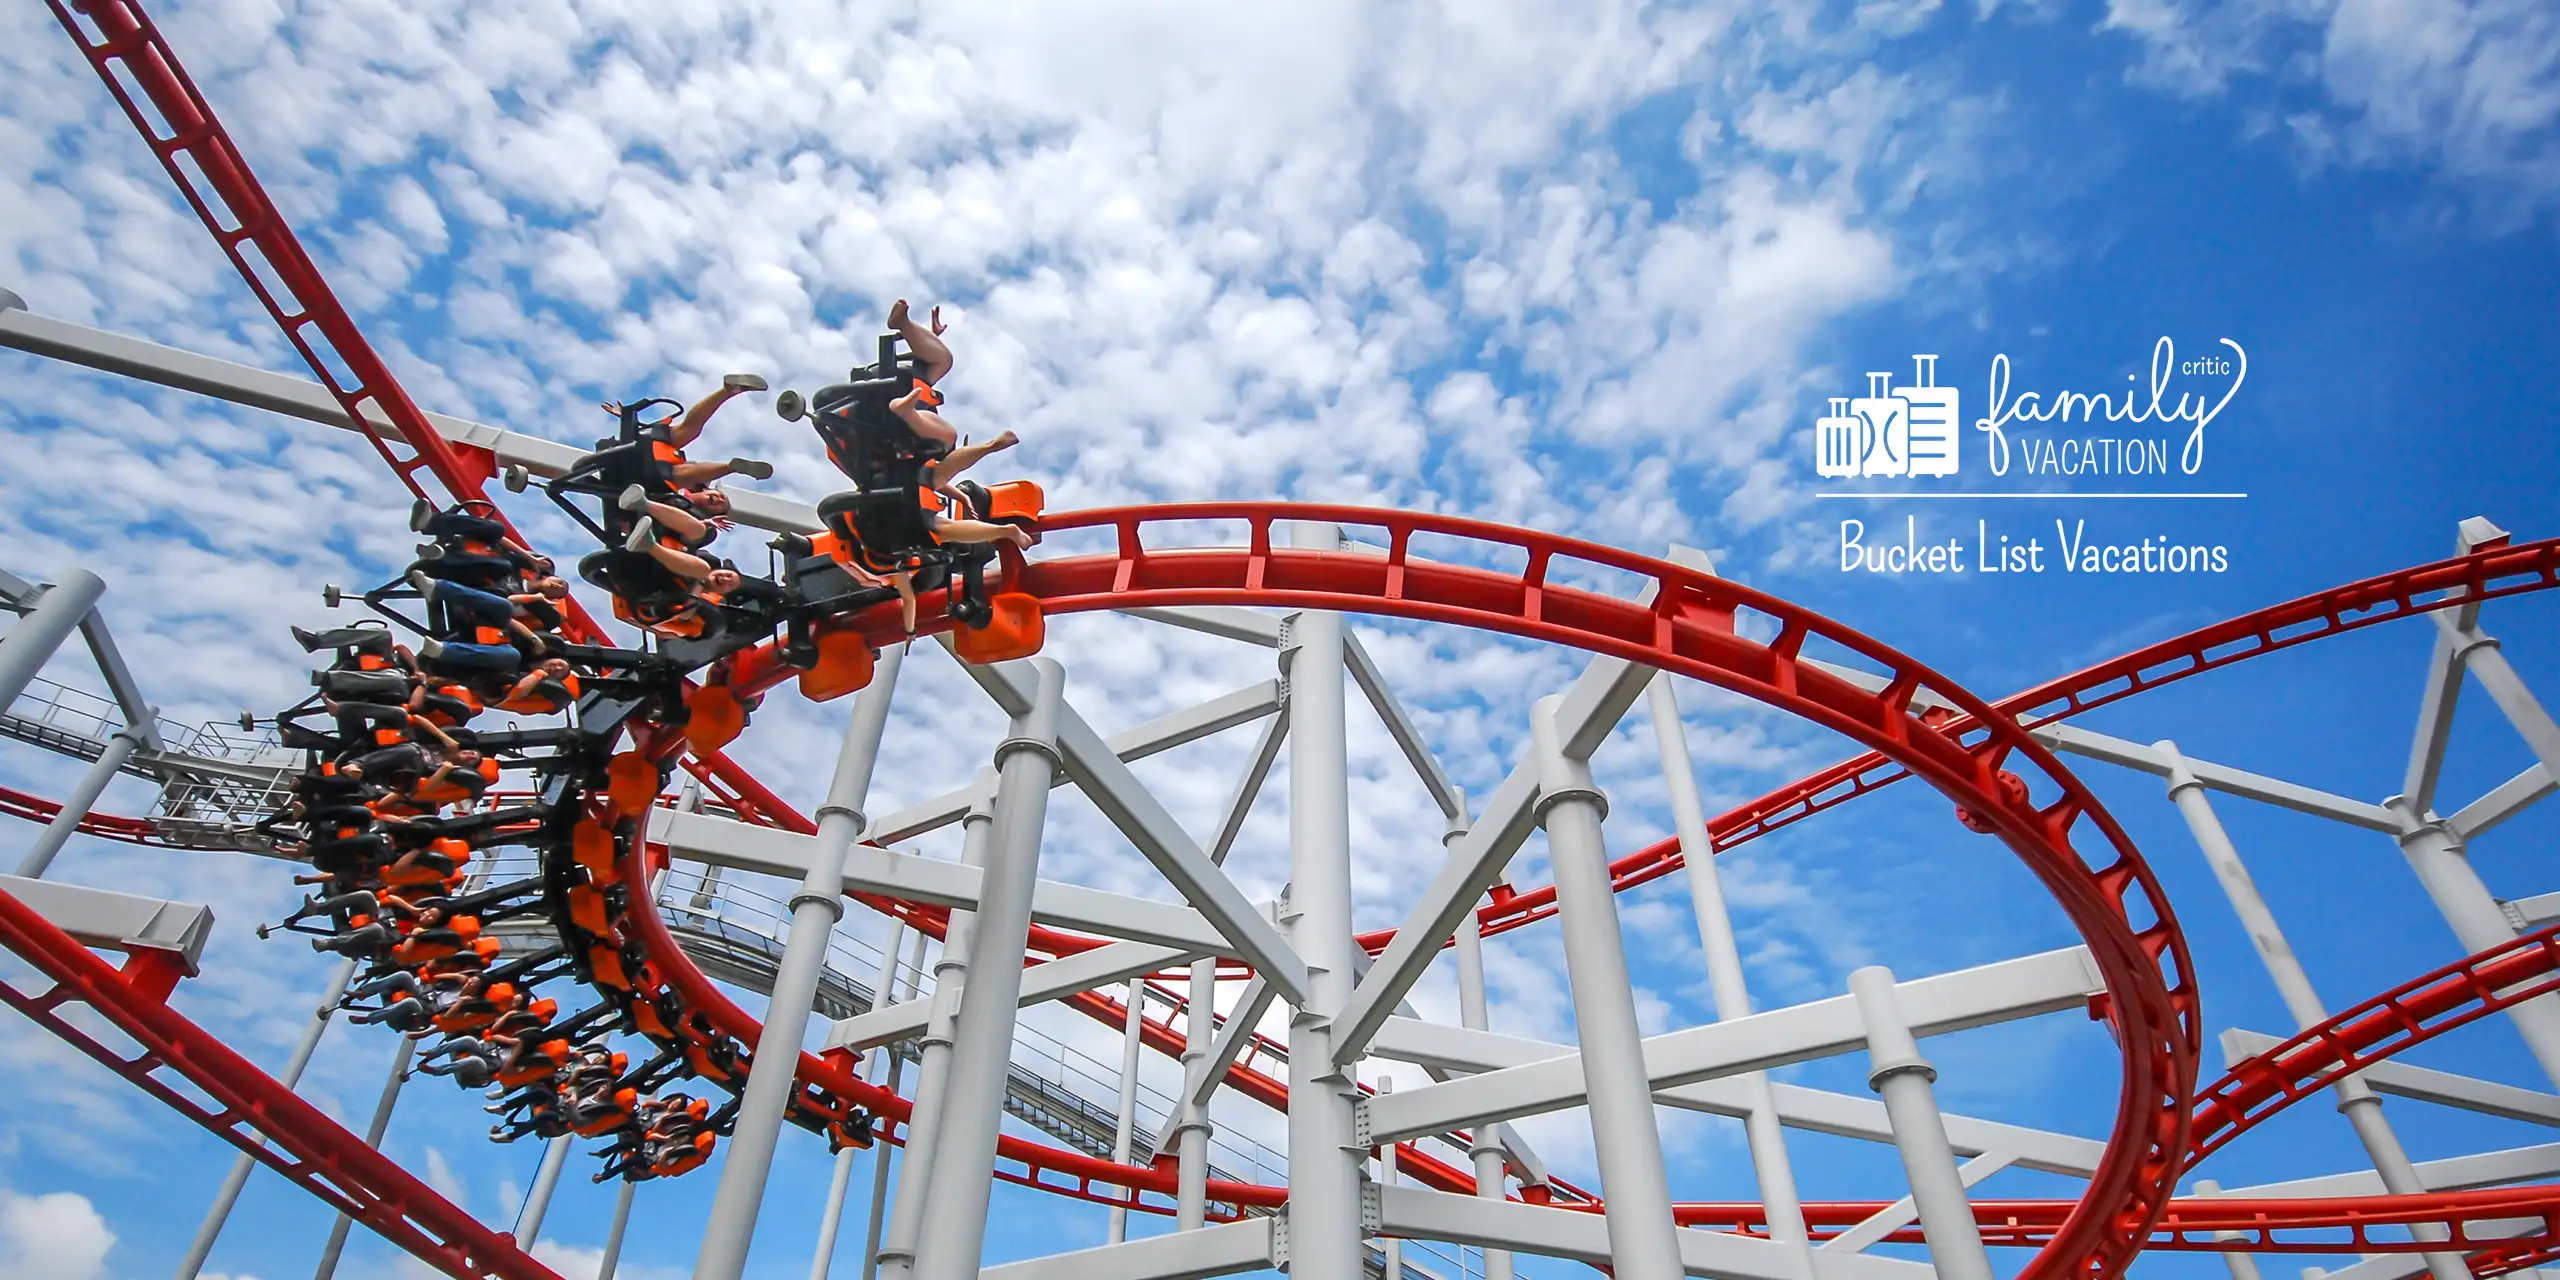 Rollercoaster against blue sky; Courtesy SIHASAKPRACHUM/Shutterstock